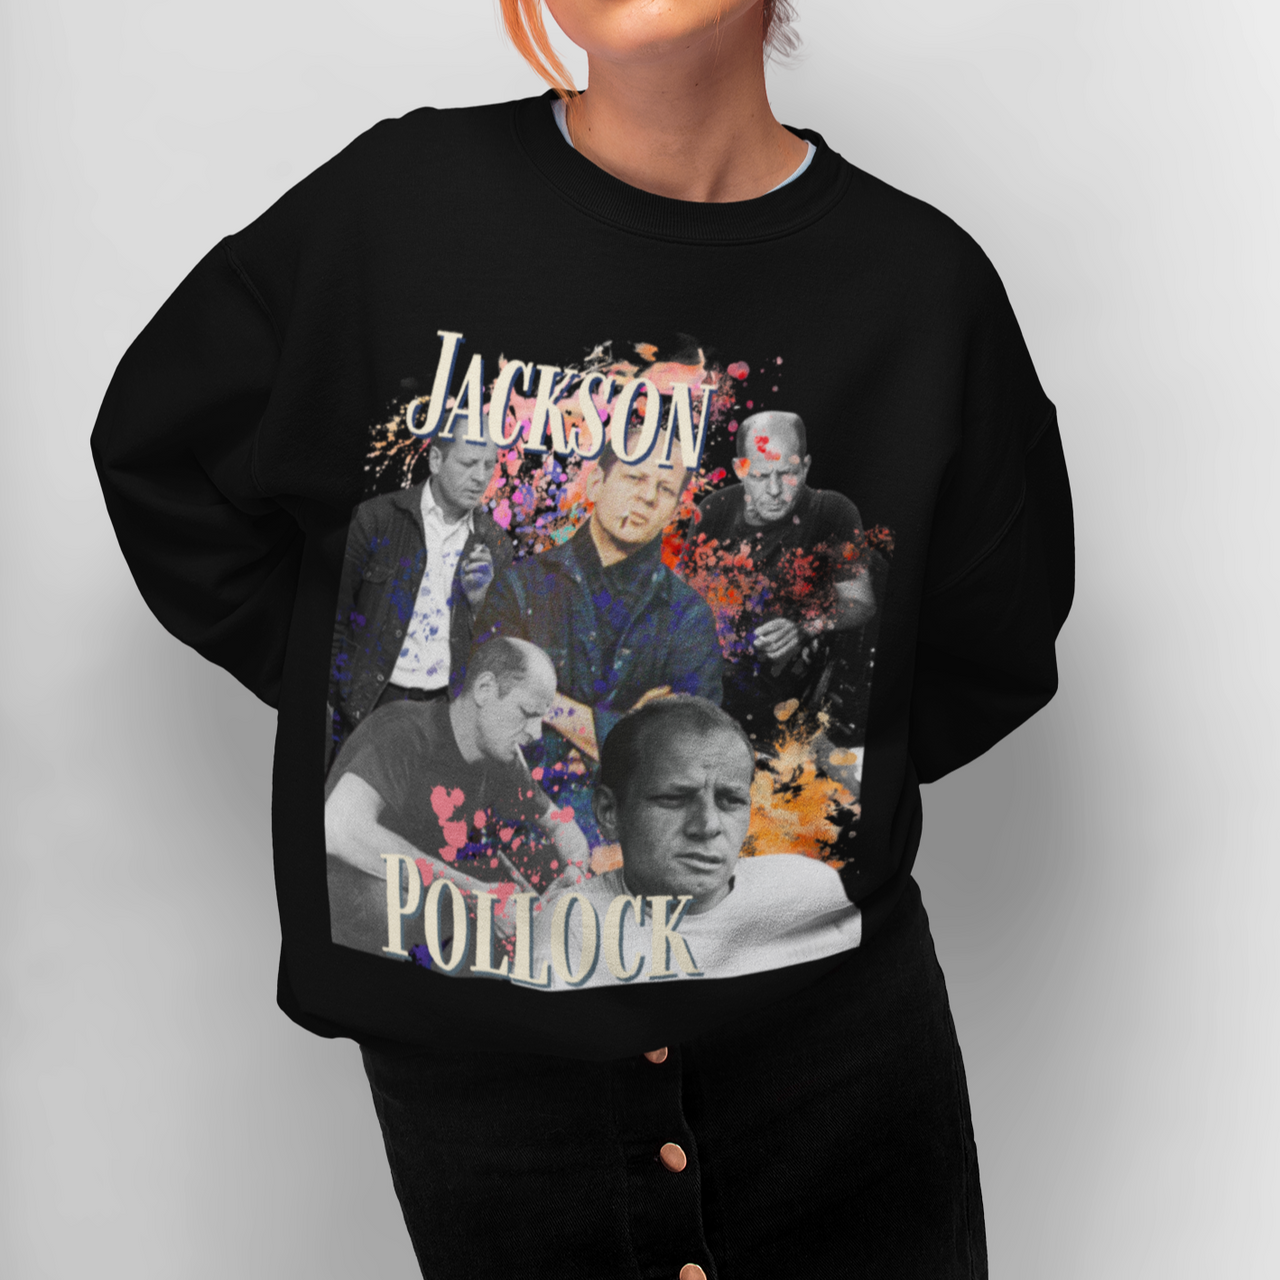 Jackson Pollock Sweatshirt, Y2K Style Bootleg Famous Abstract Expressionist Artist Fan Retro Pullover Crewneck, Artist Gift